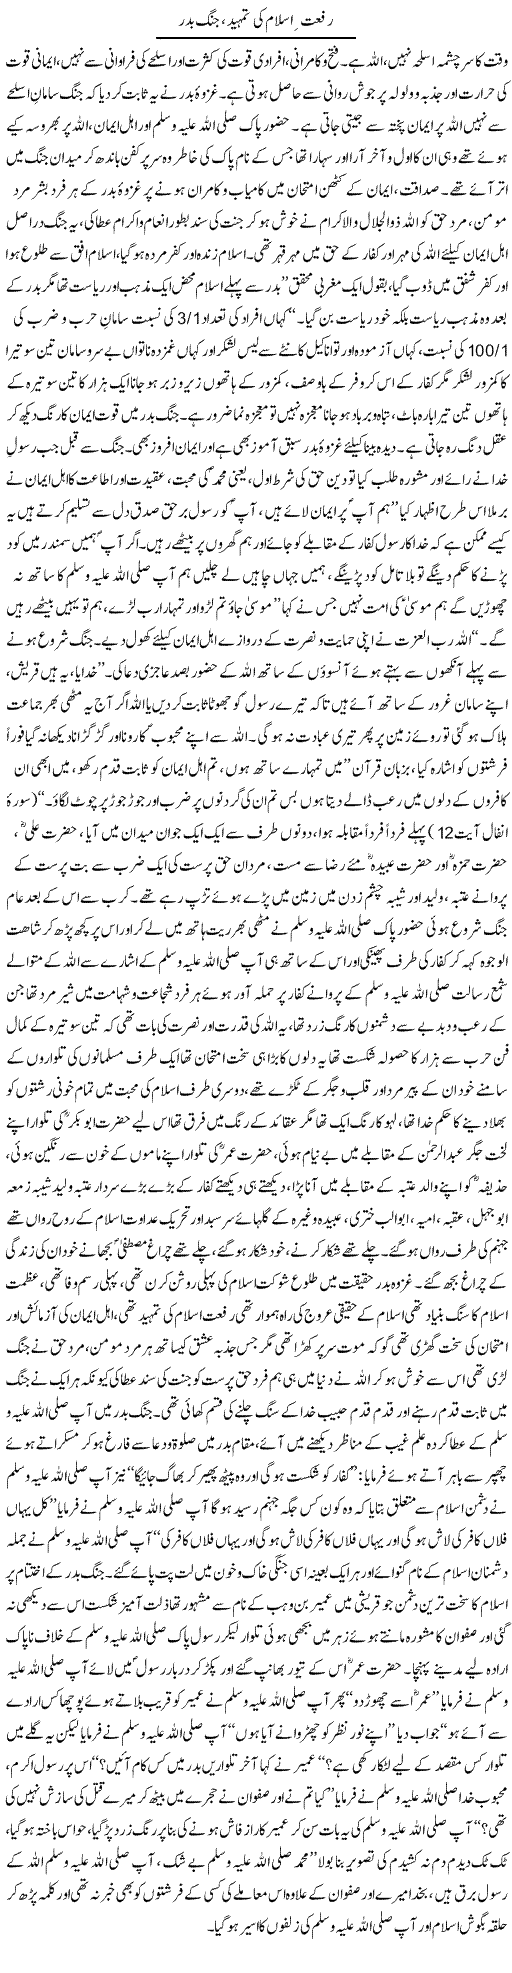 Riffat e Islam Ki Tamheed, Jung Badar | Dr. Muhammad Tayyab Khan Singhanvi | Daily Urdu Columns